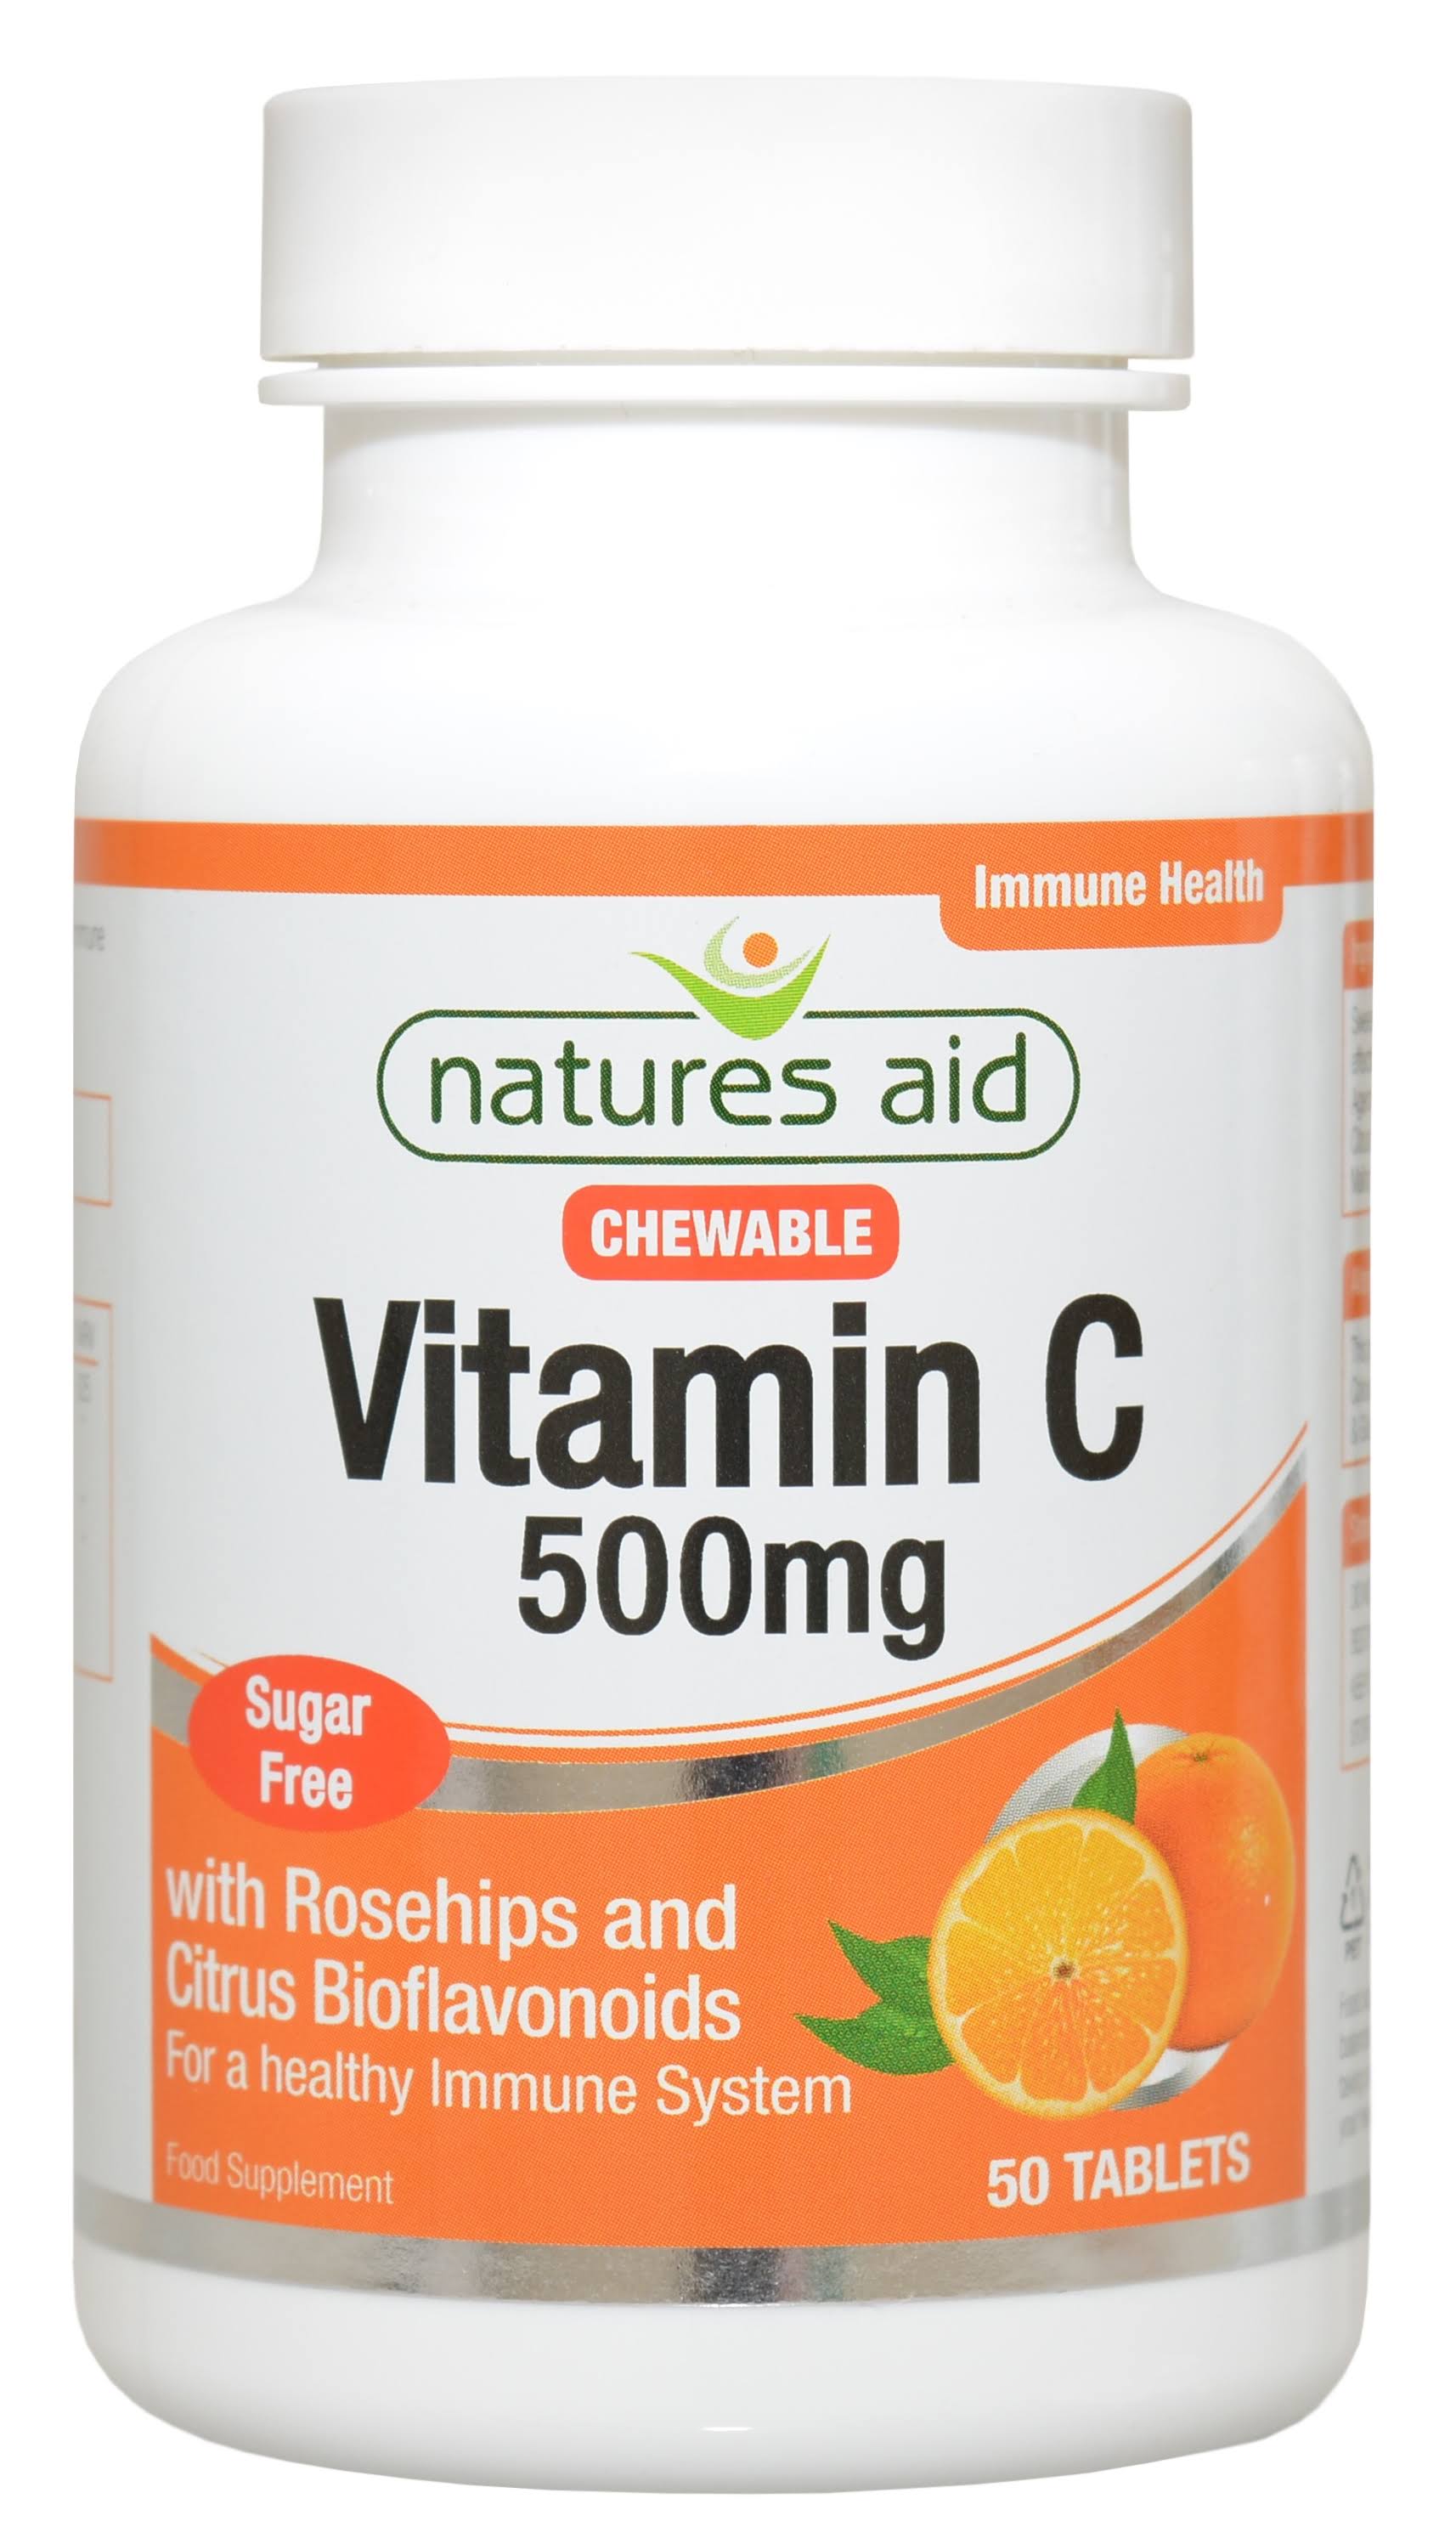 Natures Aid Chewable Sugar Free Vitamin C 500mg - 50 Tablets